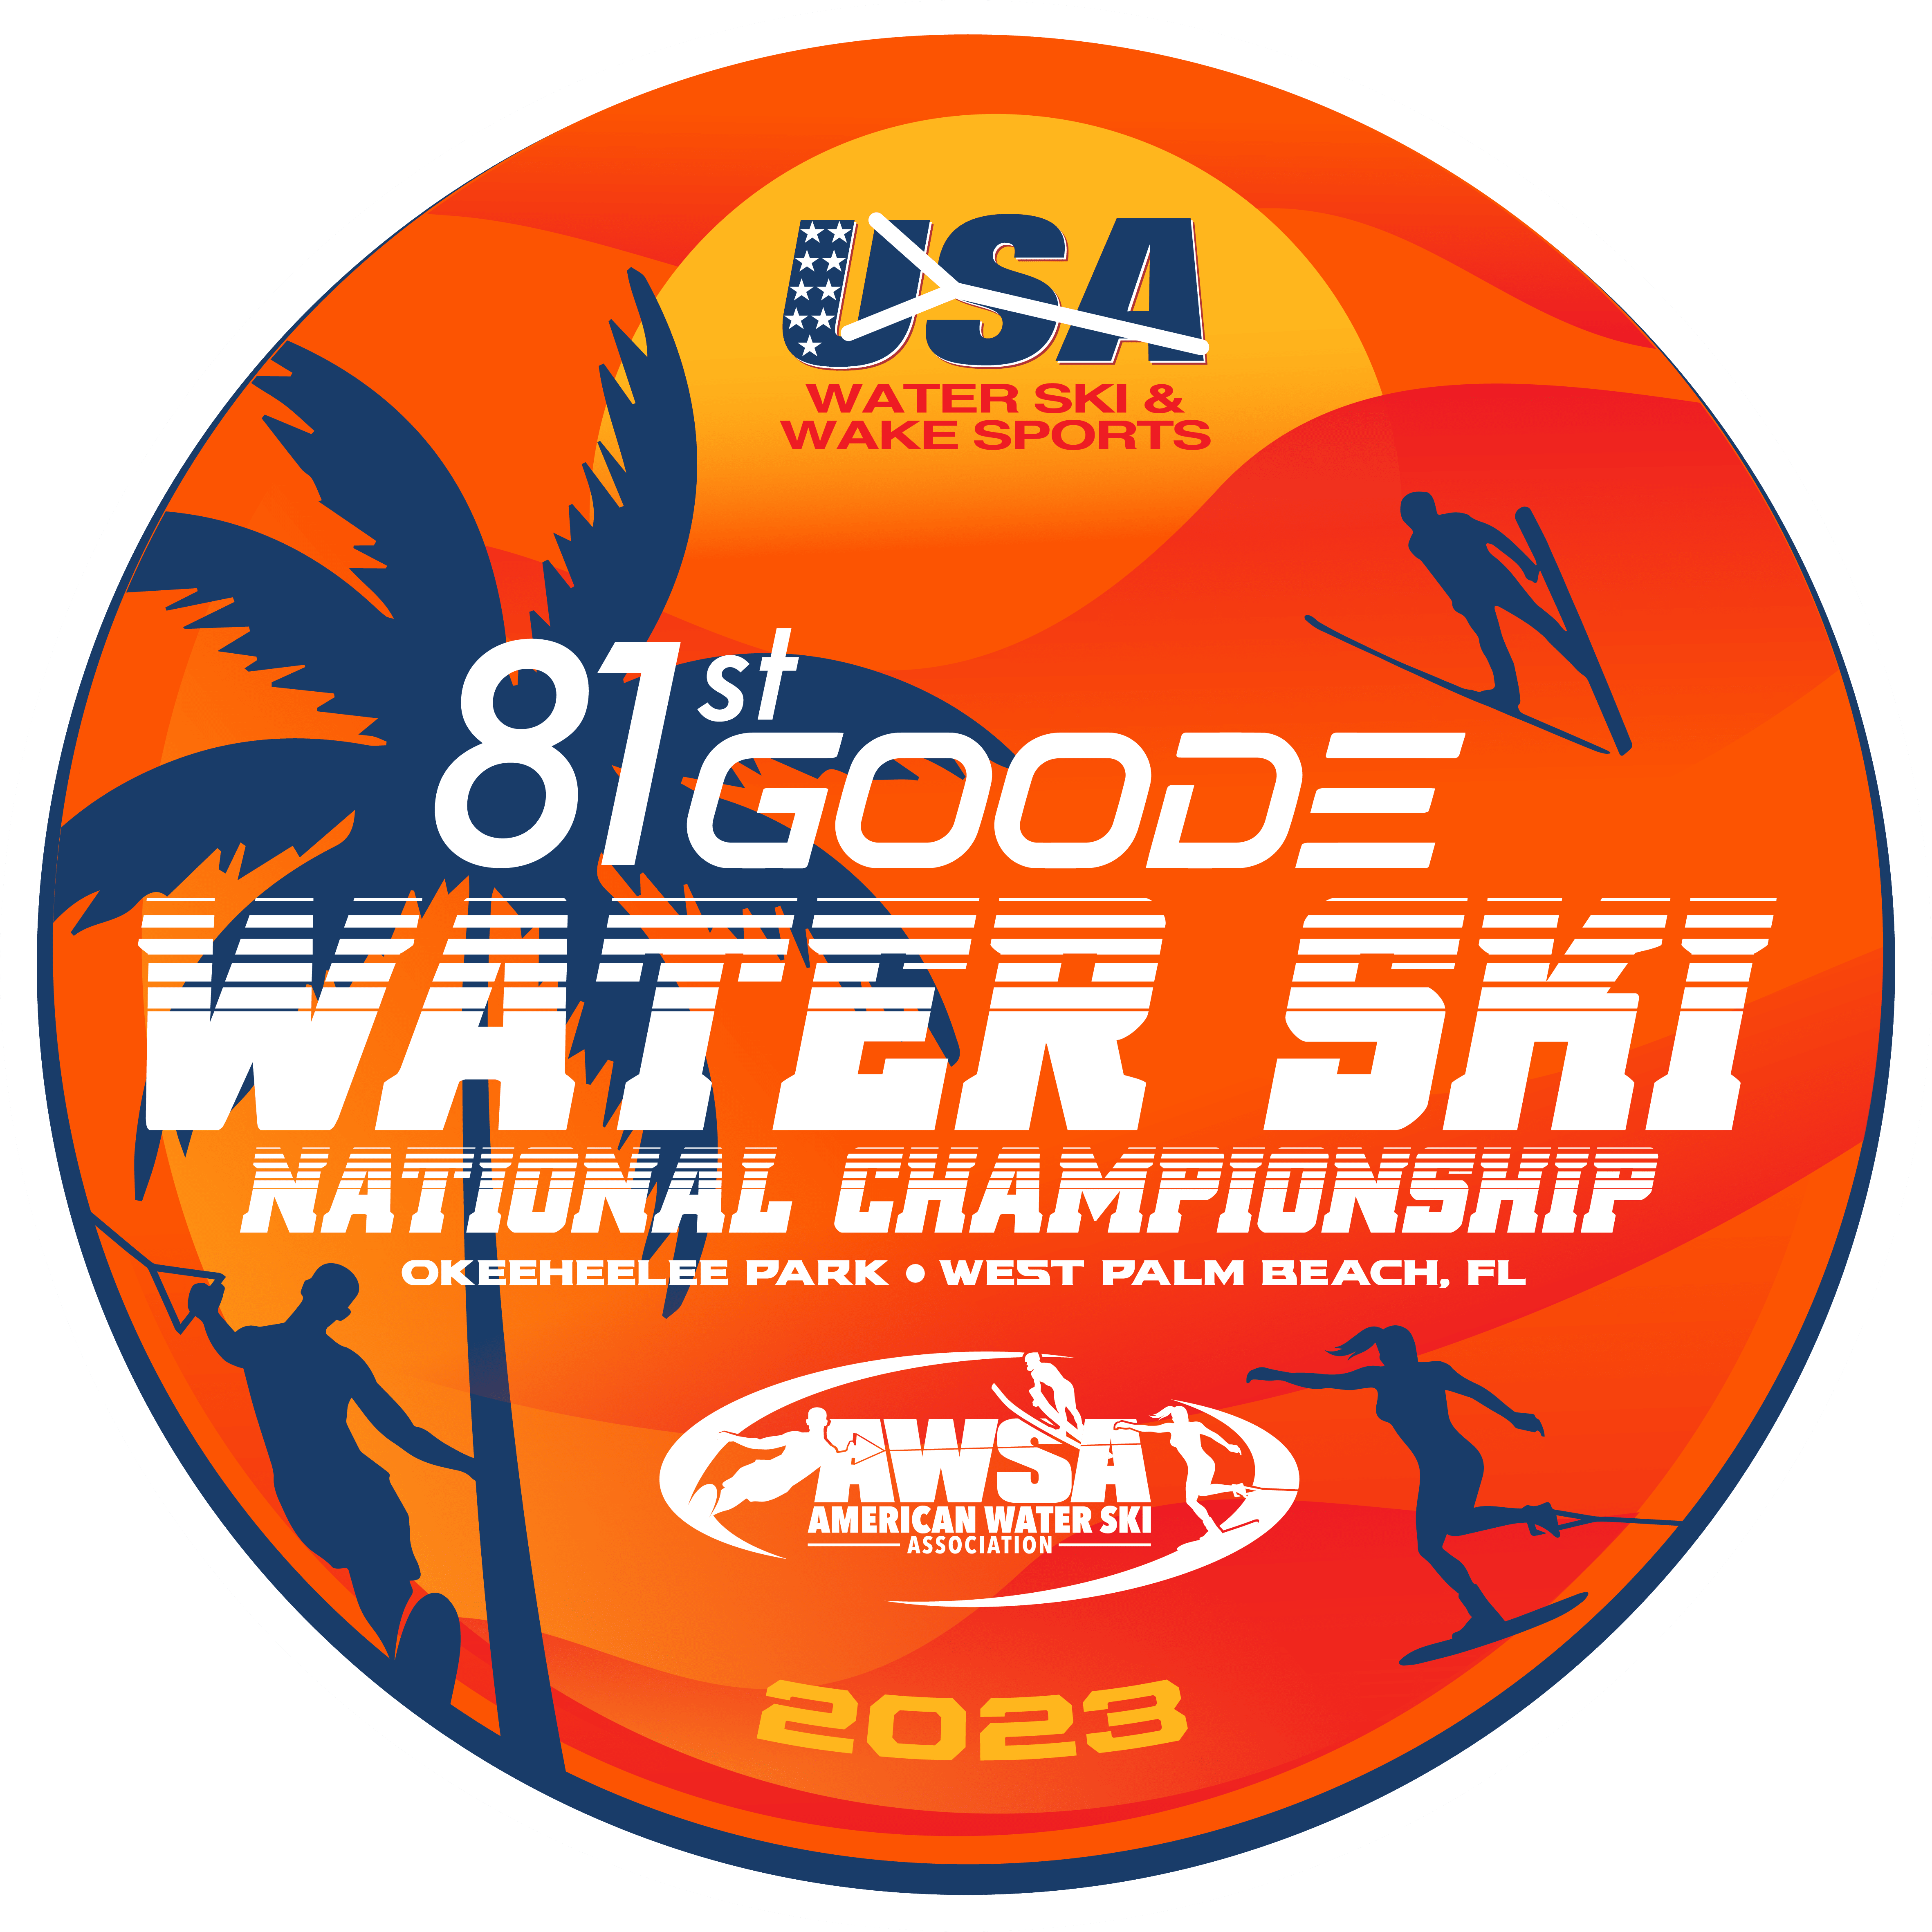 USA Water Ski & Wake Sports Goode Water Ski National Championships Registration